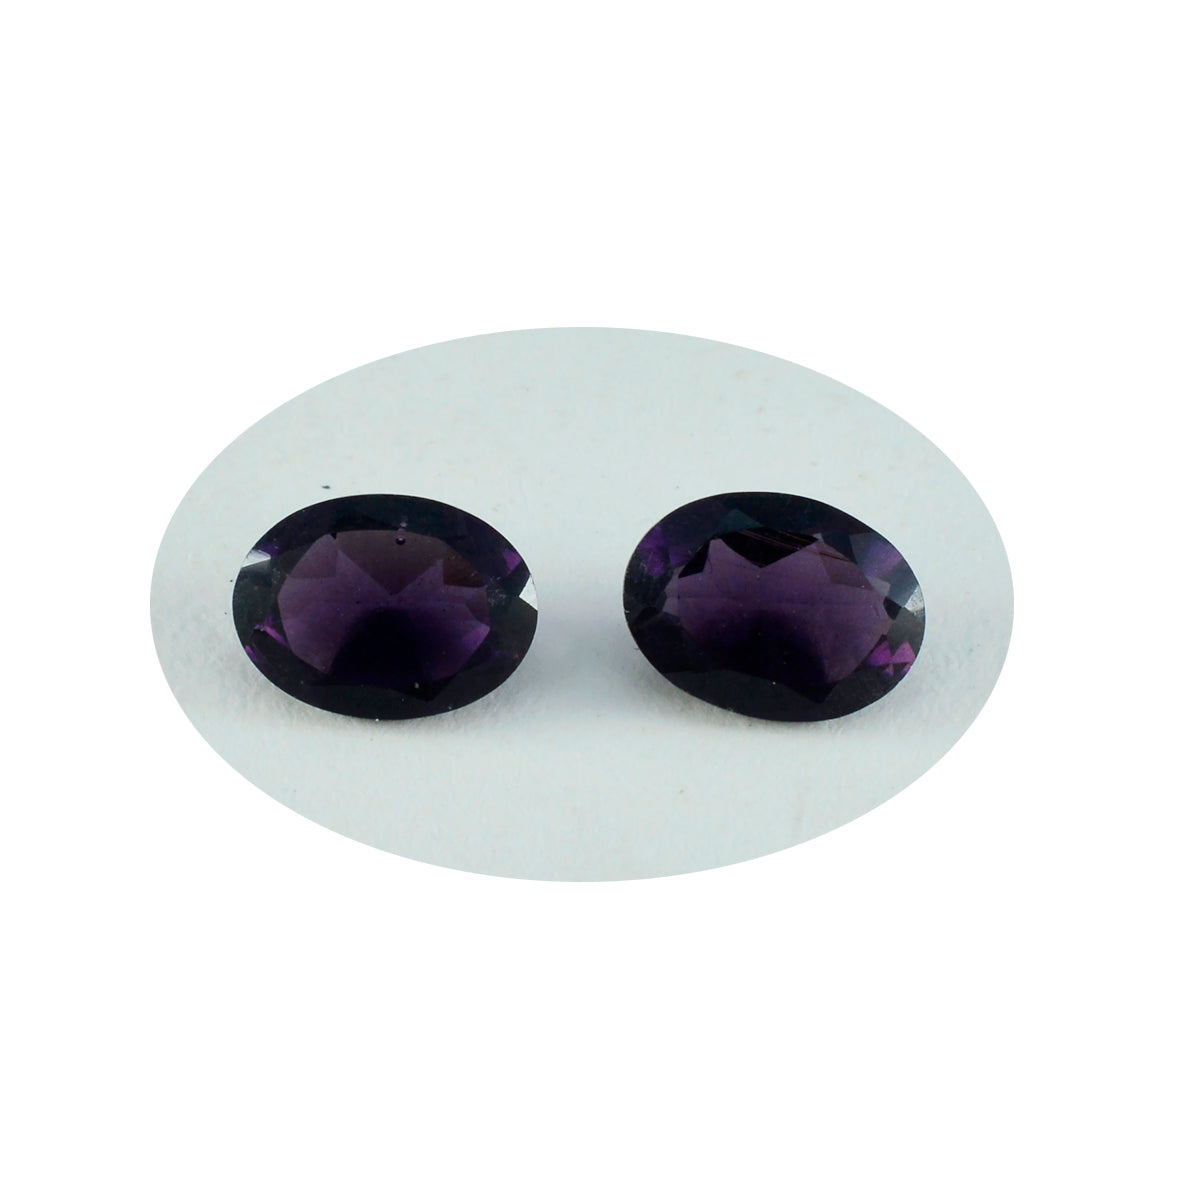 Riyogems 1 Stück lila Amethyst CZ facettiert 9 x 11 mm ovale Form, süße Qualität, lose Edelsteine